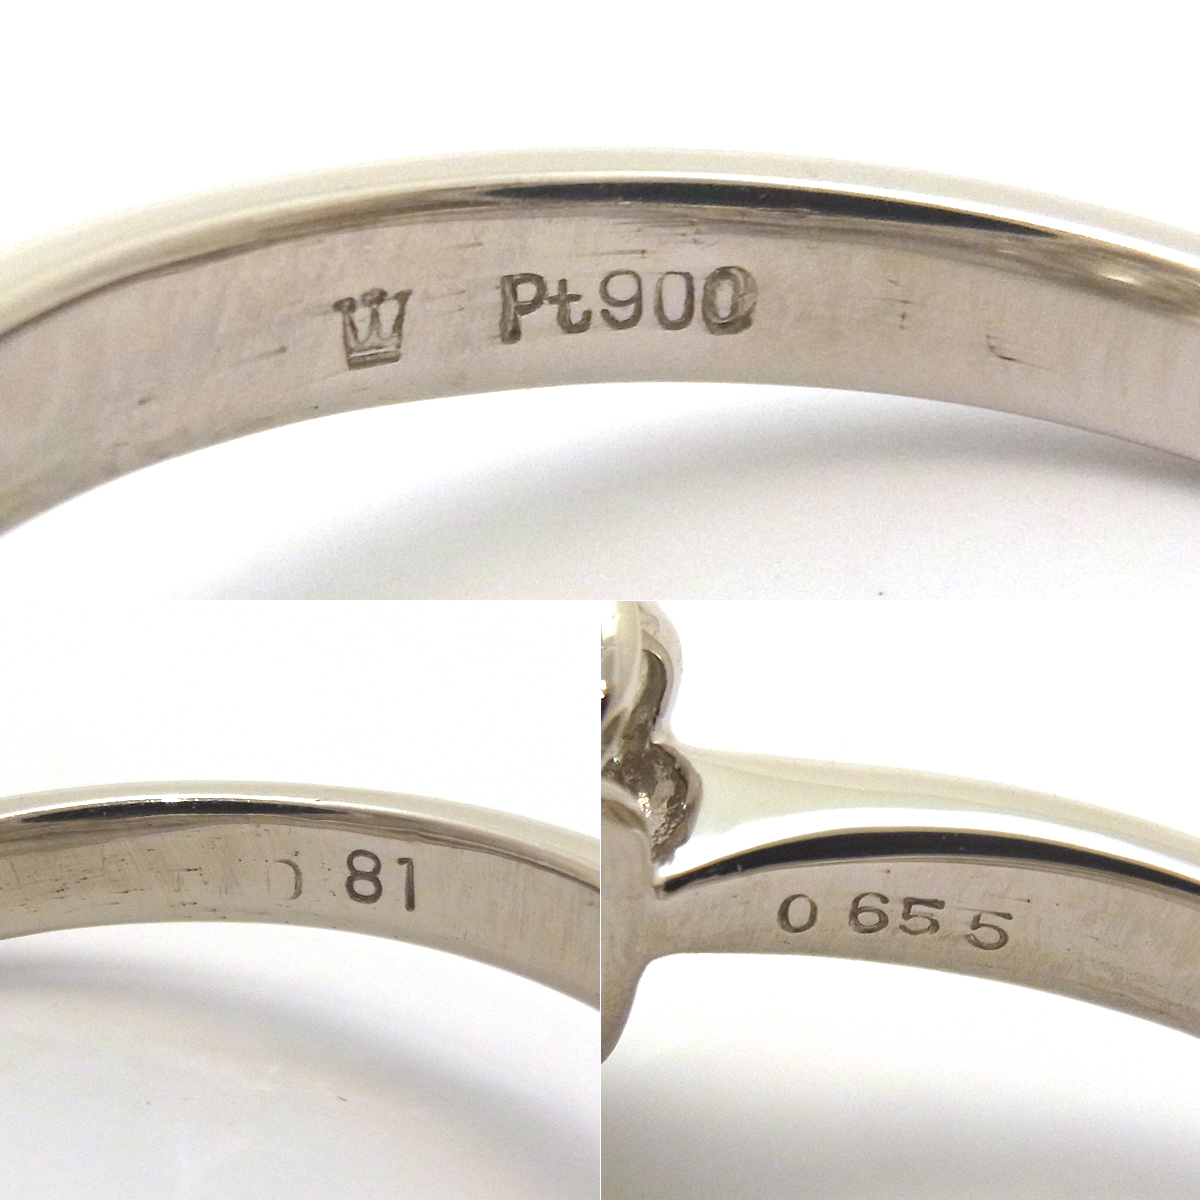 Pt900 ダイヤモンド指輪 10号 シルバーカラー